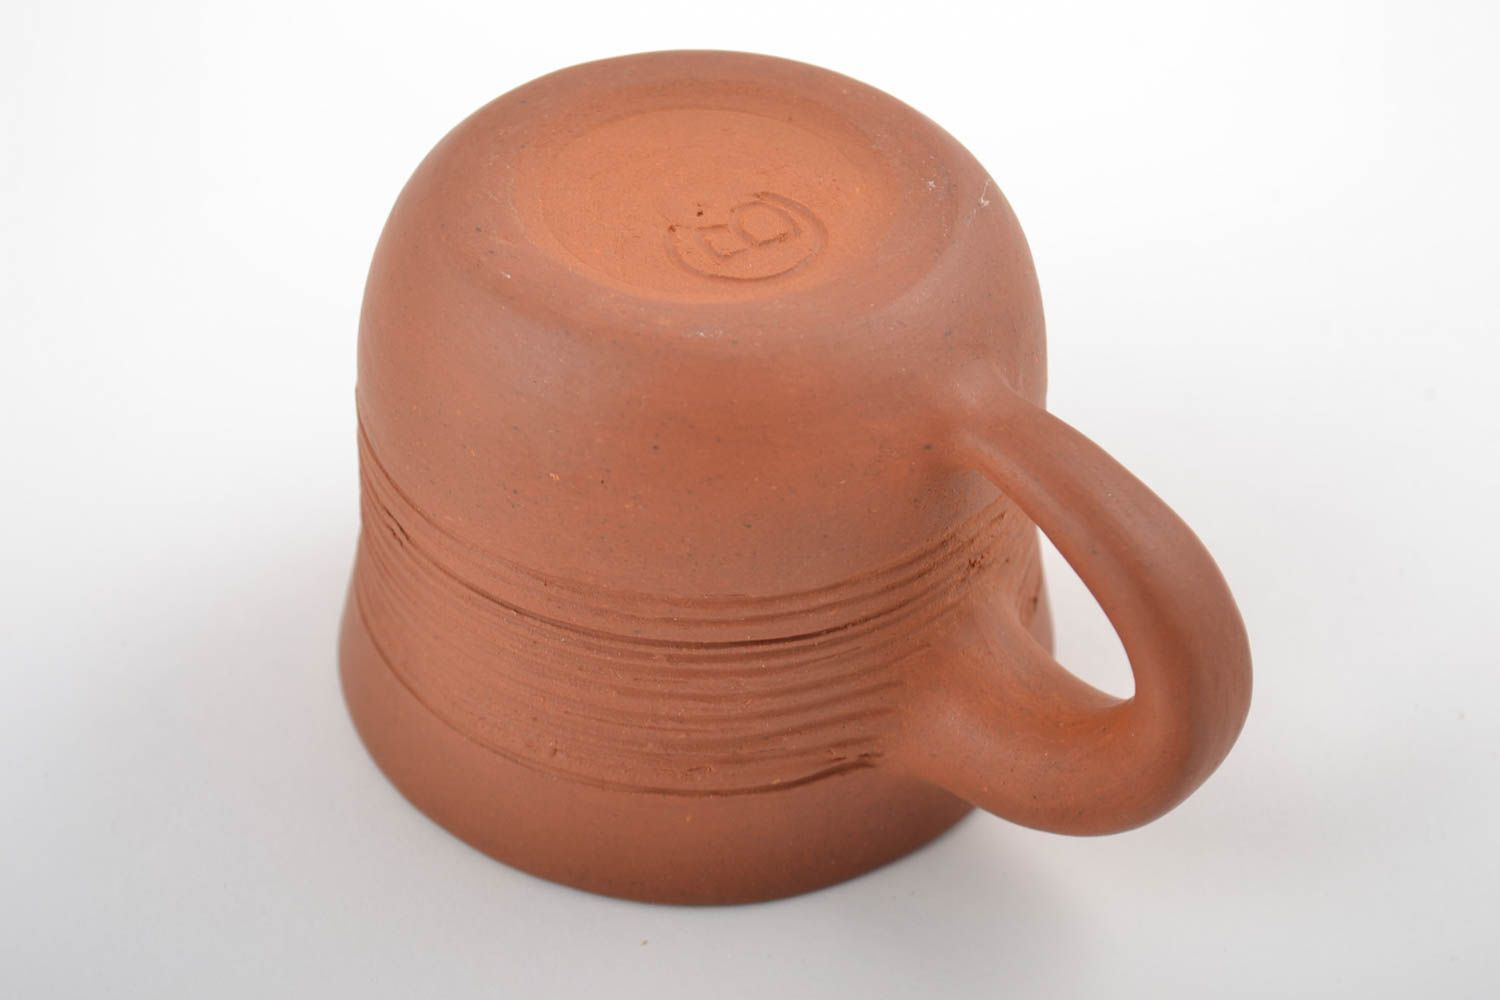 Petite tasse originale brune faite main 15 cl vaisselle écologique ethnique photo 4